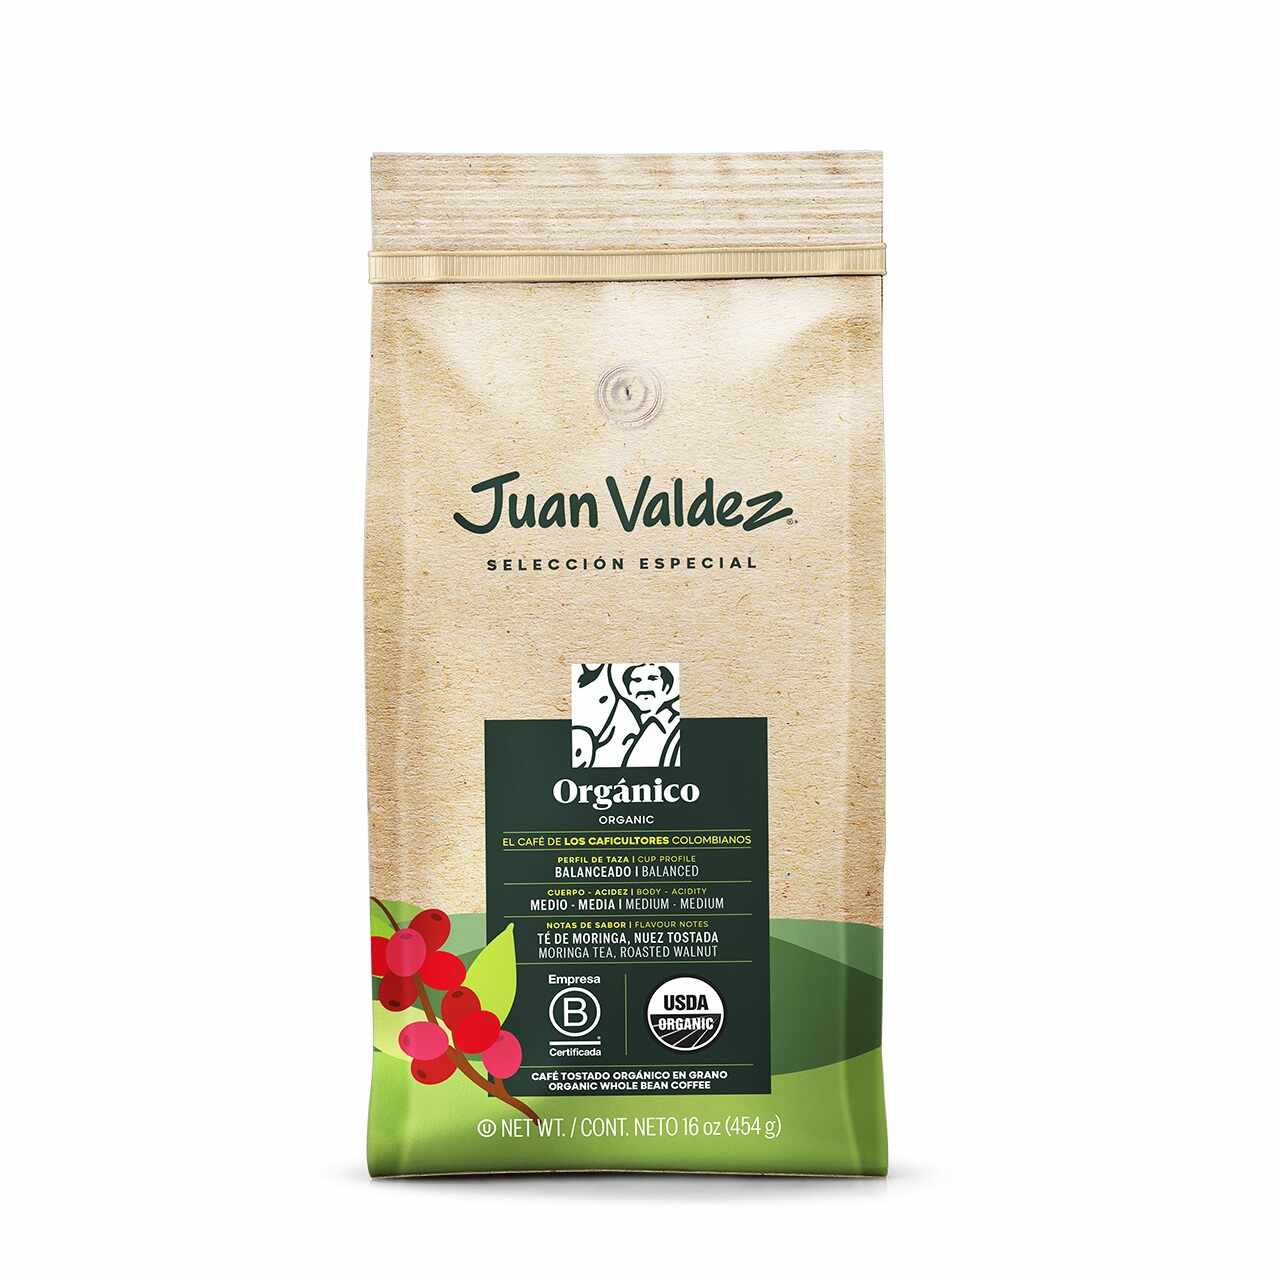 Juan Valdez Organico cafea boabe 454g